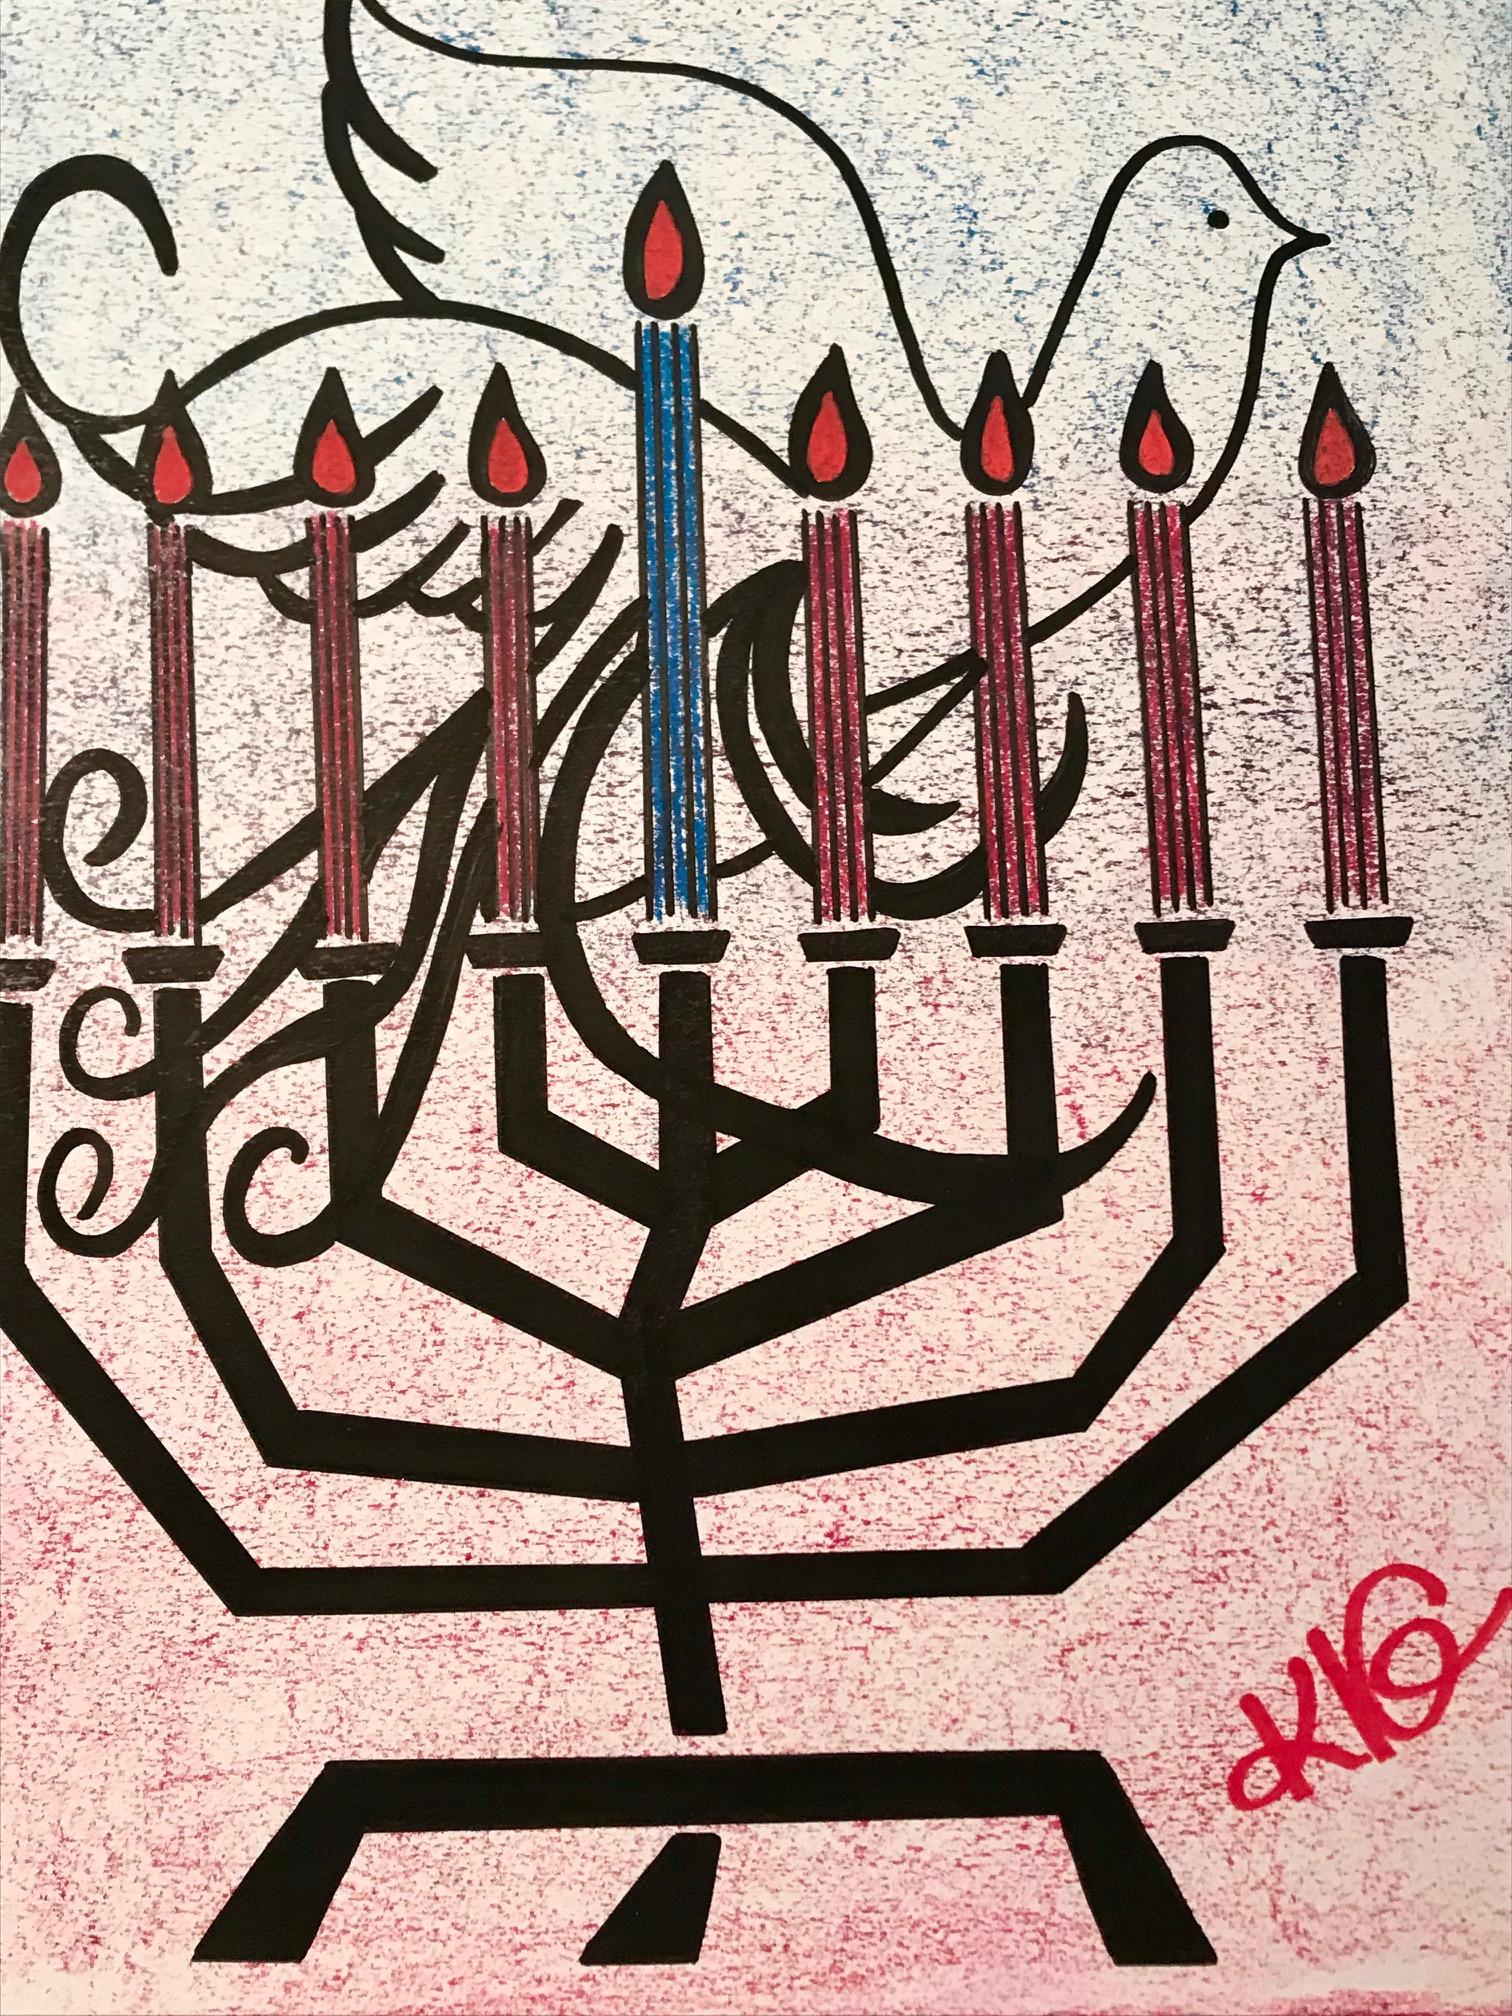 Hanukkah and dove - Art by KLG